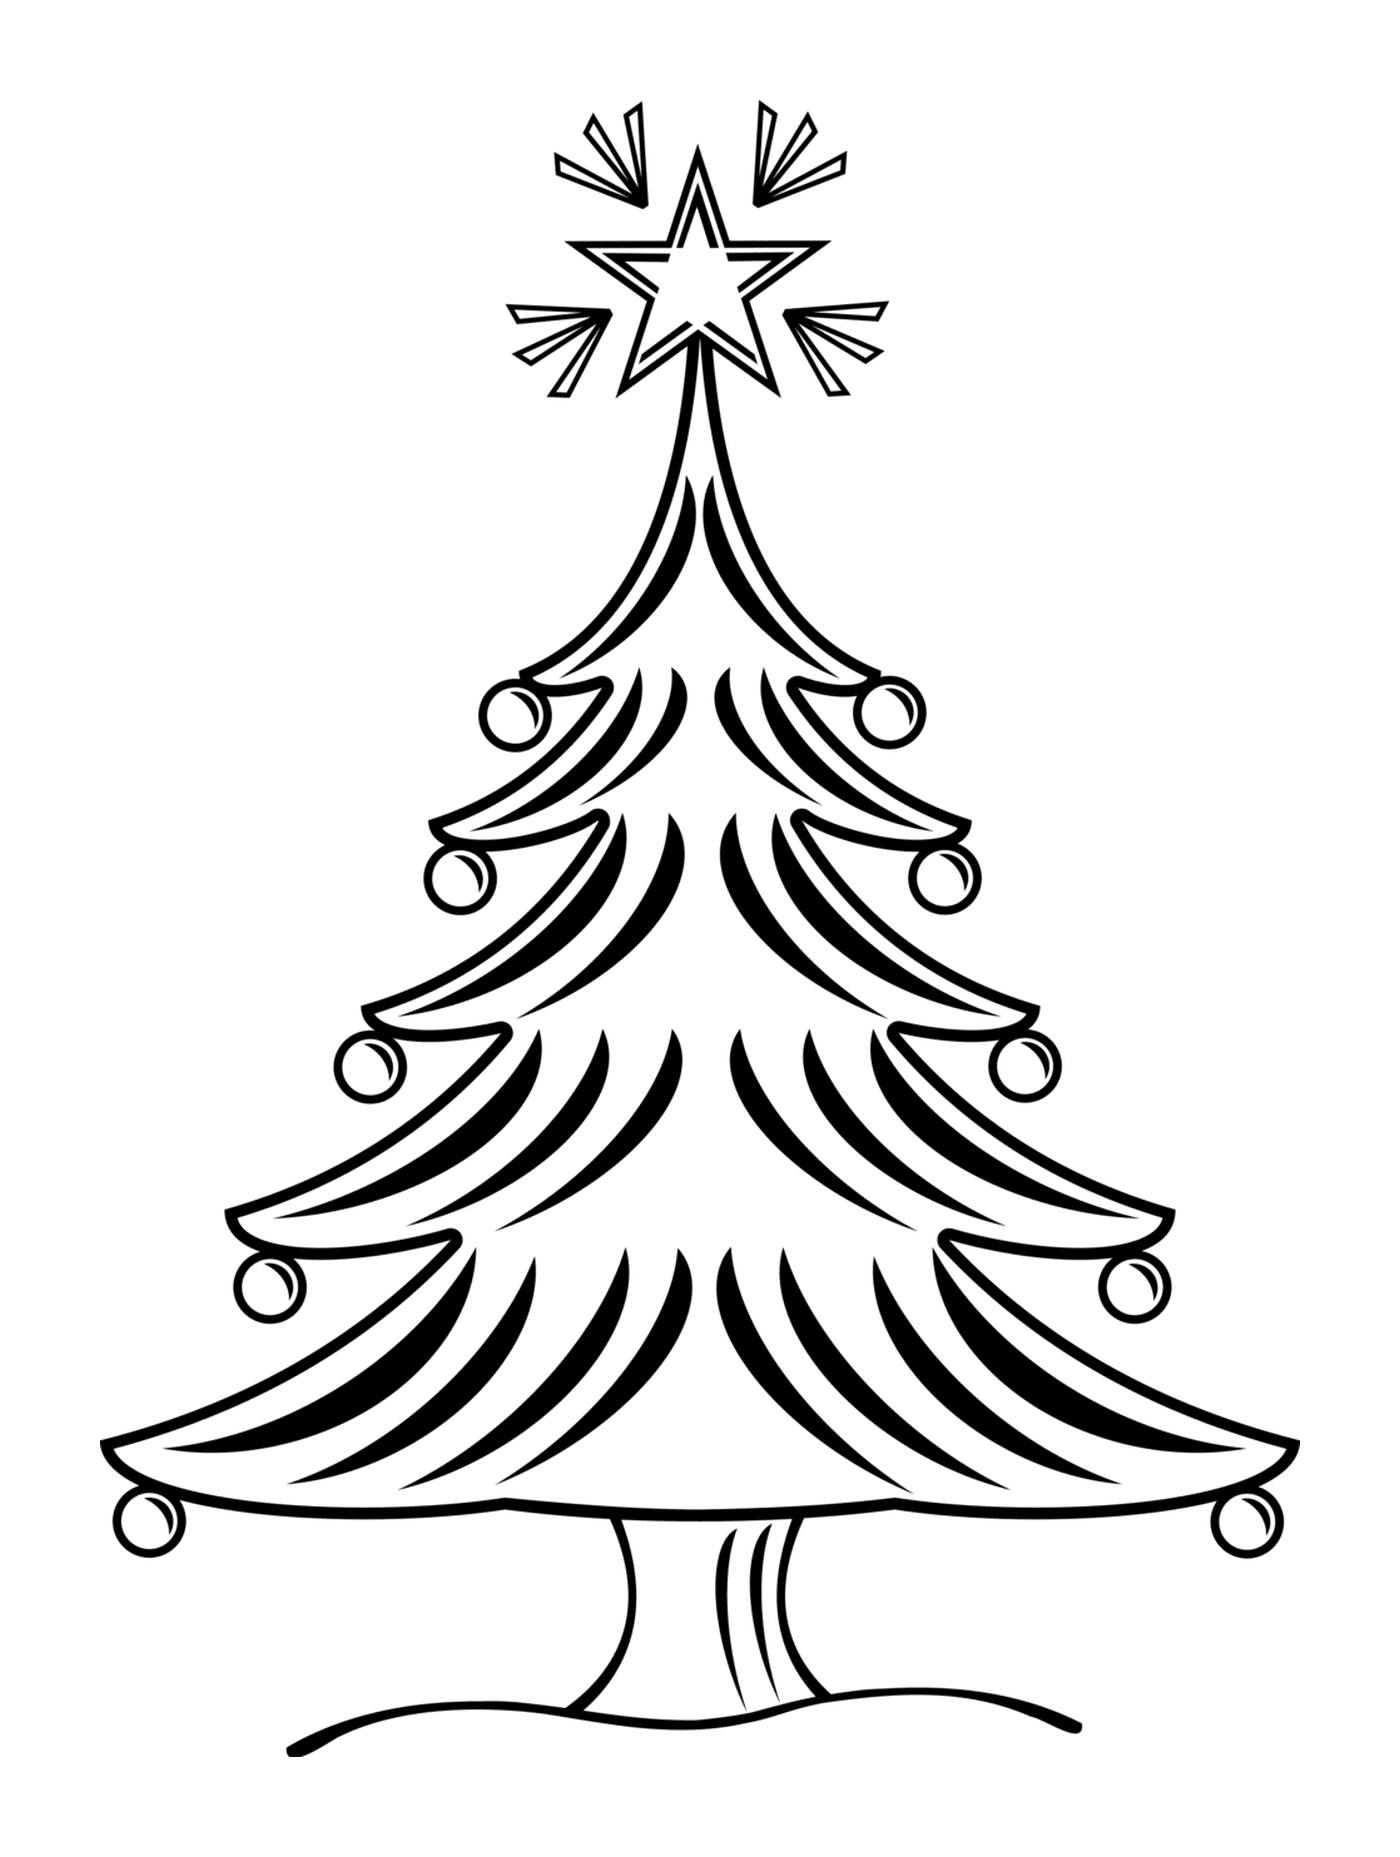  Árvore de Natal 2017 com estrela 